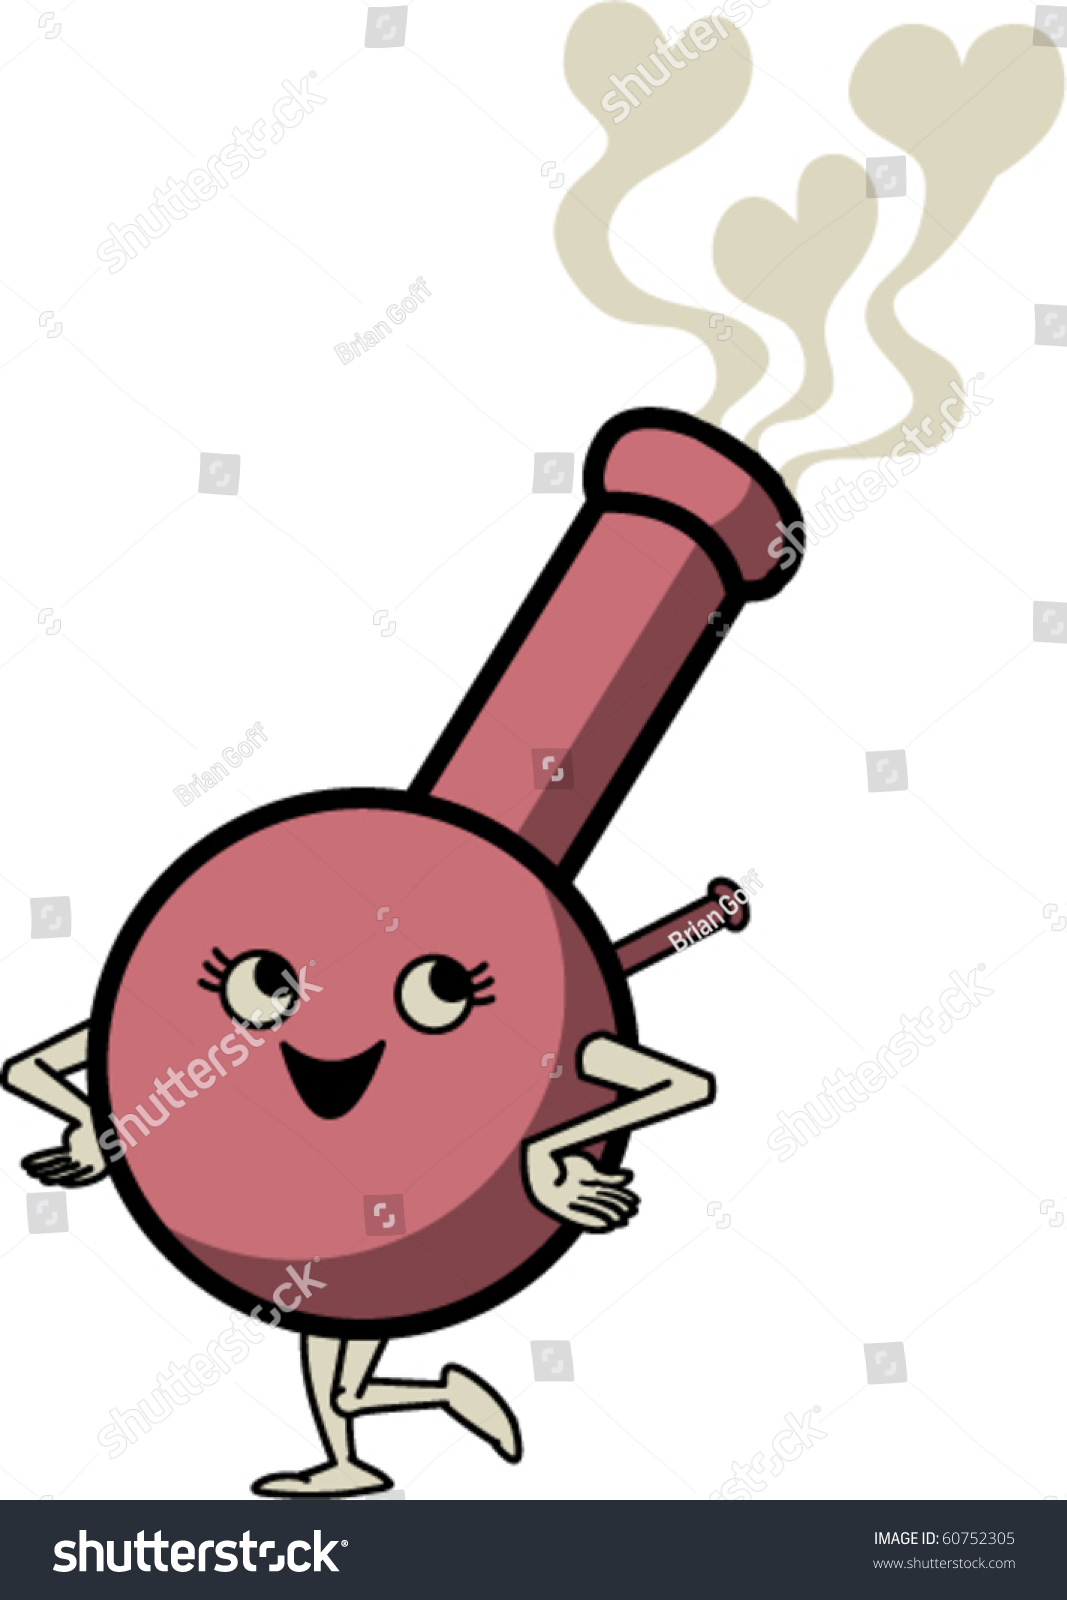 Vector Illustration Of A Cute Cartoon Bong. - 60752305 : Shutterstock